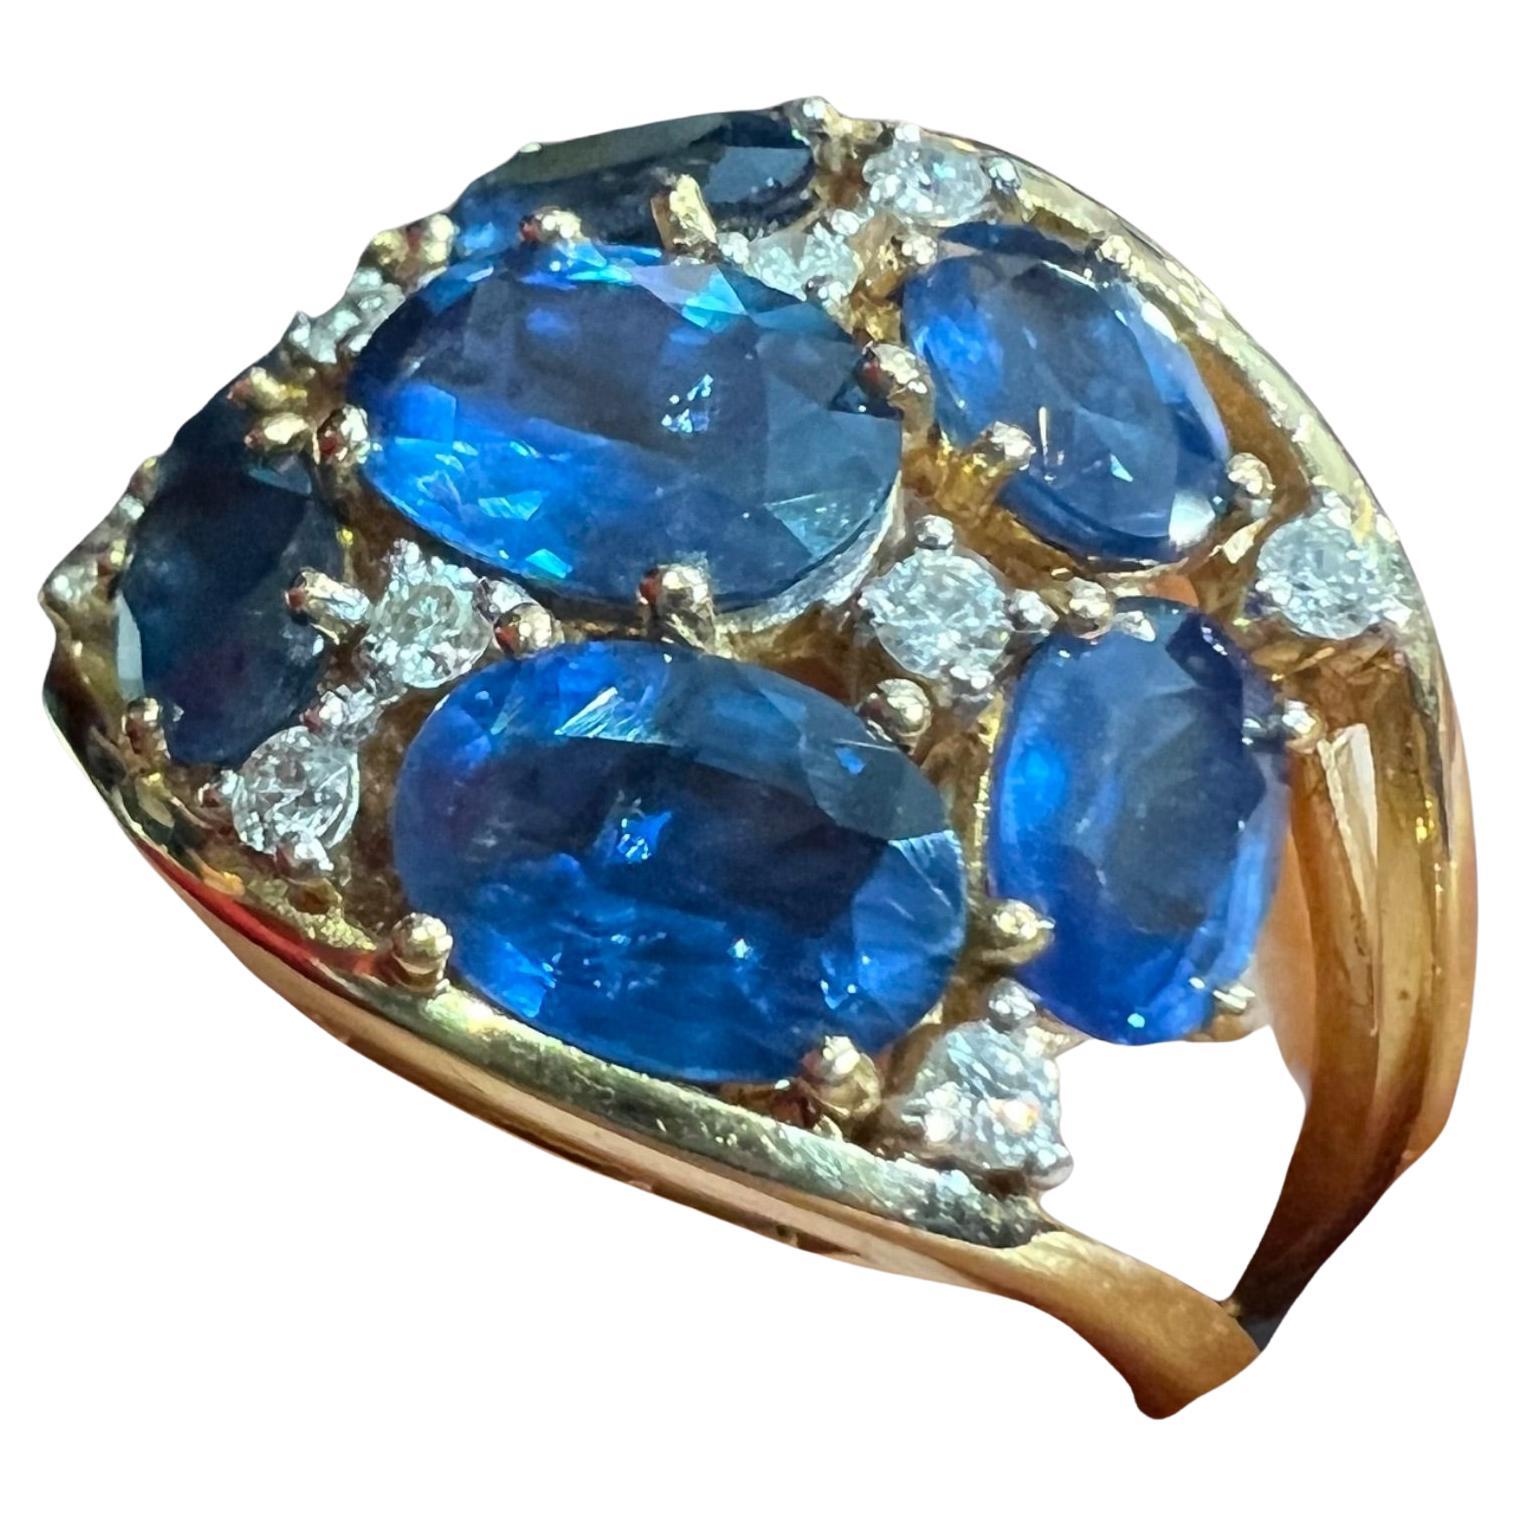 6, 19 Carat of Blue Saphirs and Diamonds, 18 Carat Gold Cocktail Ring